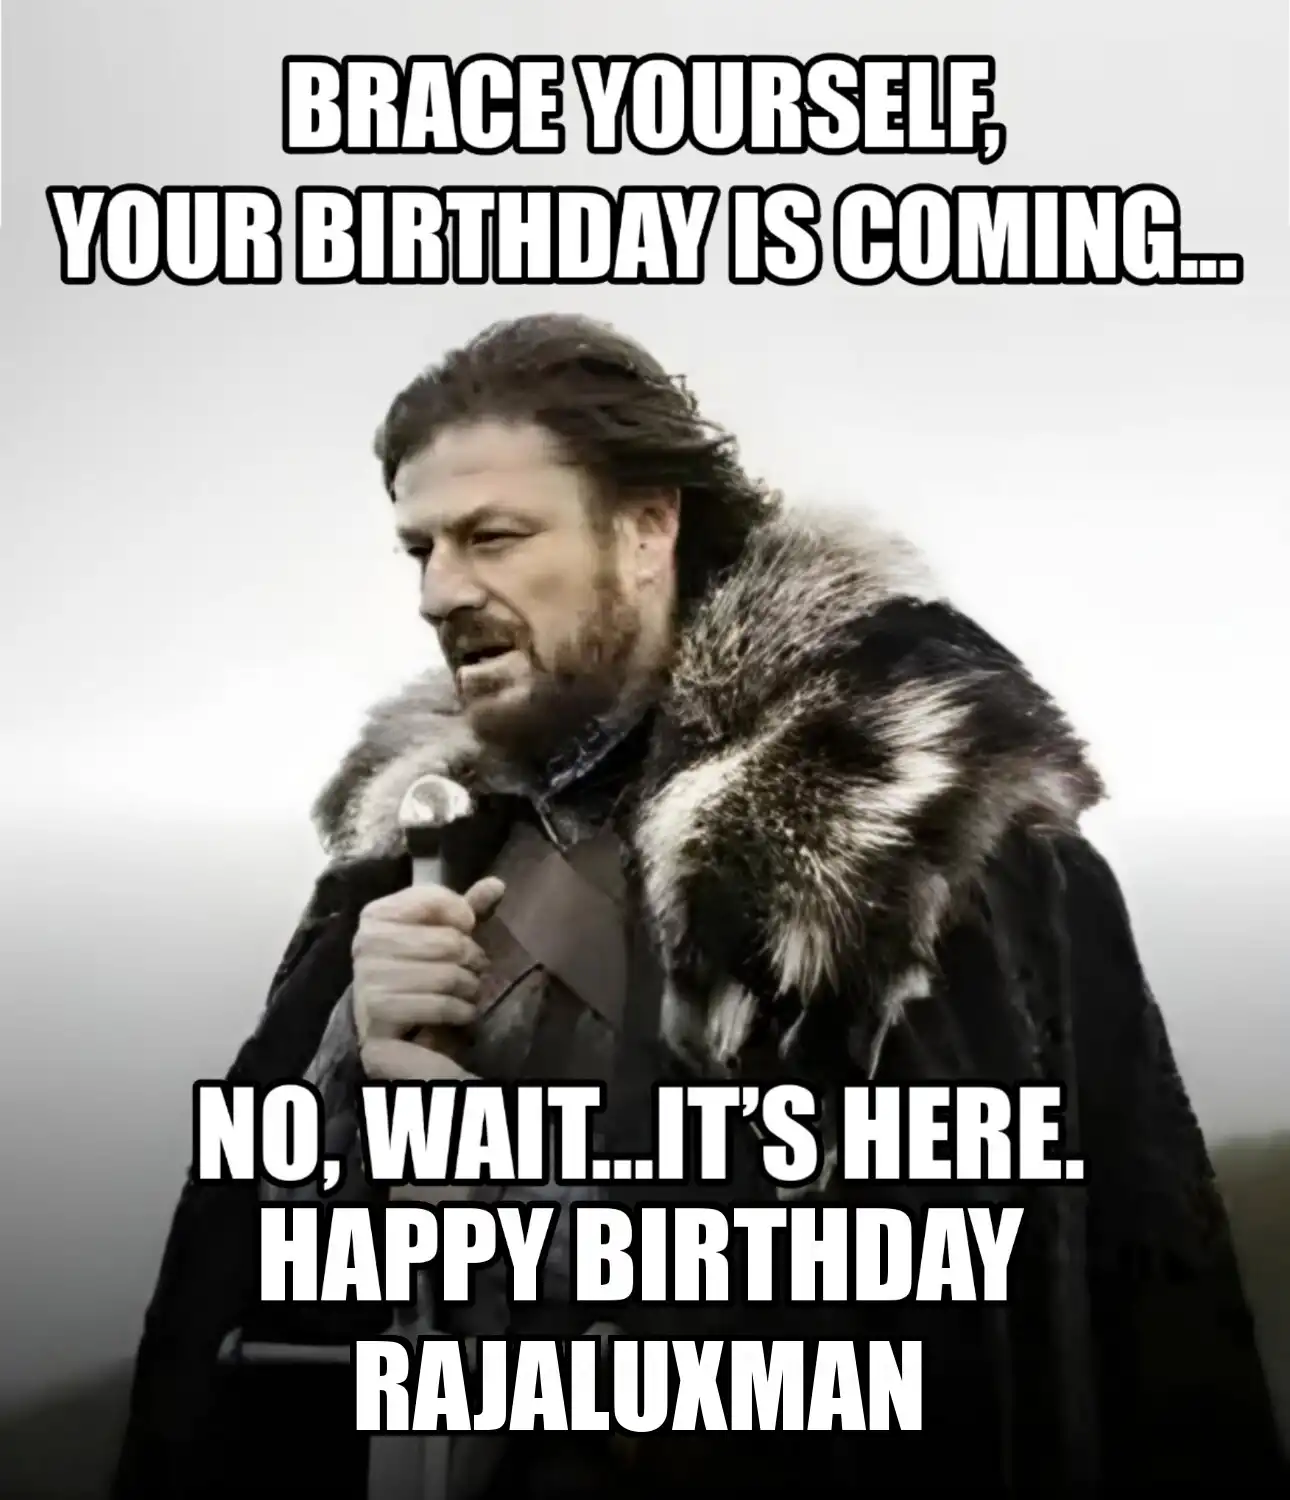 Happy Birthday Rajaluxman Brace Yourself Your Birthday Is Coming Meme